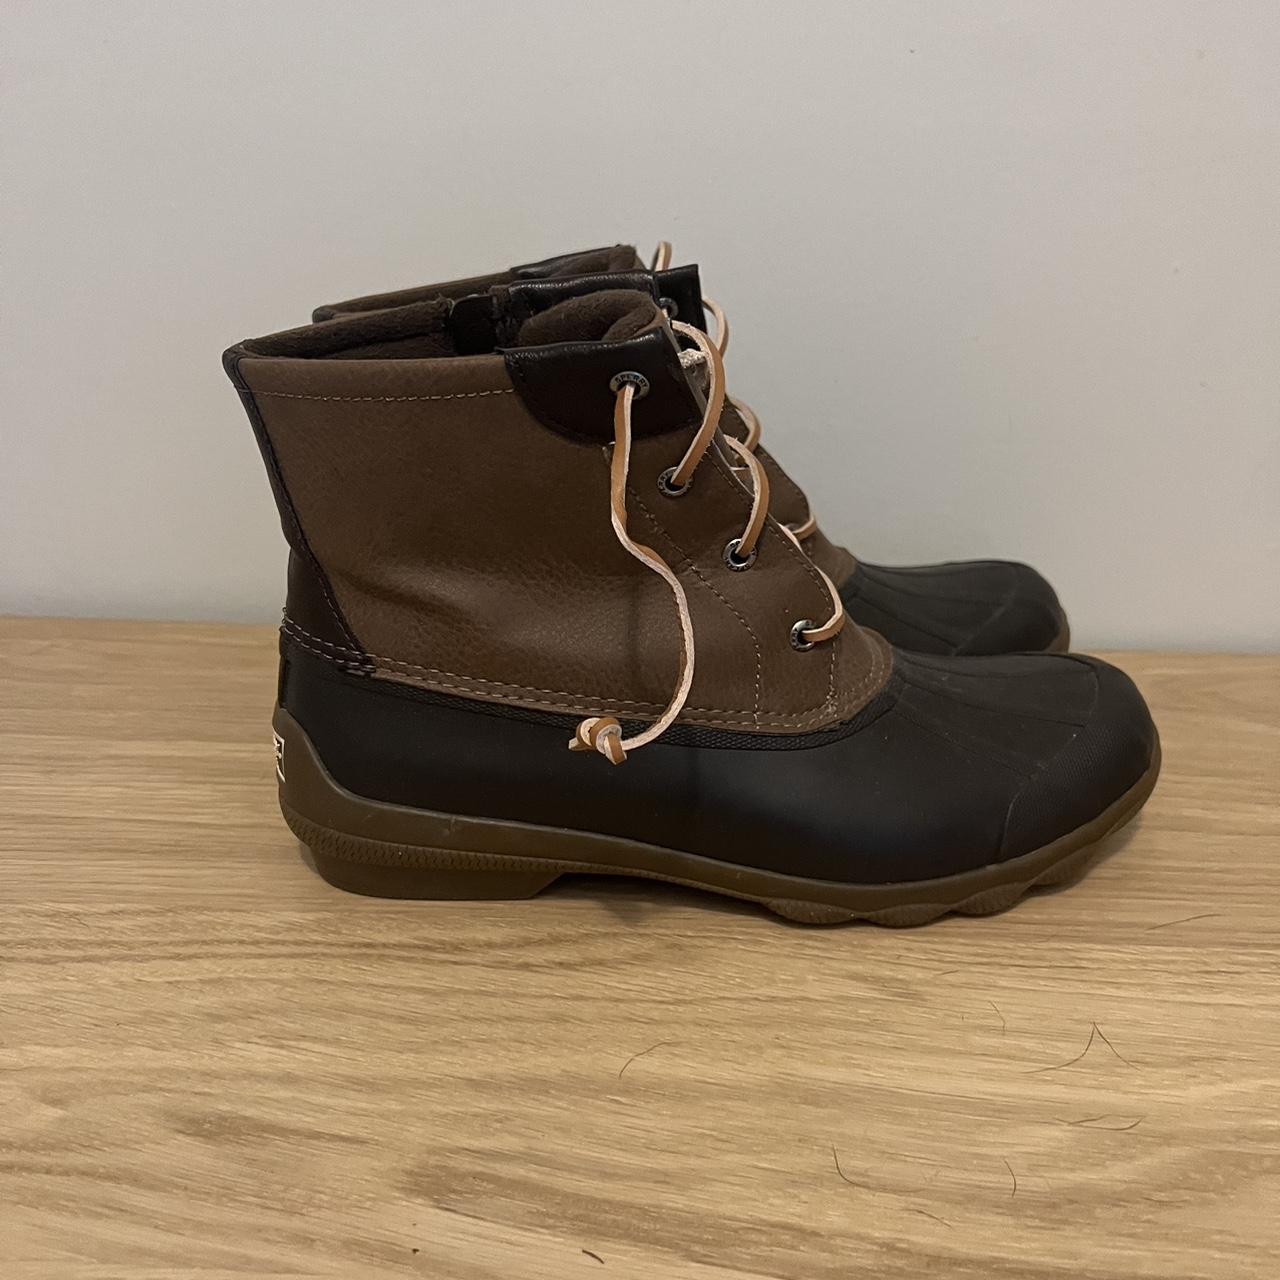 Sperry Women's Brown Boots (3)